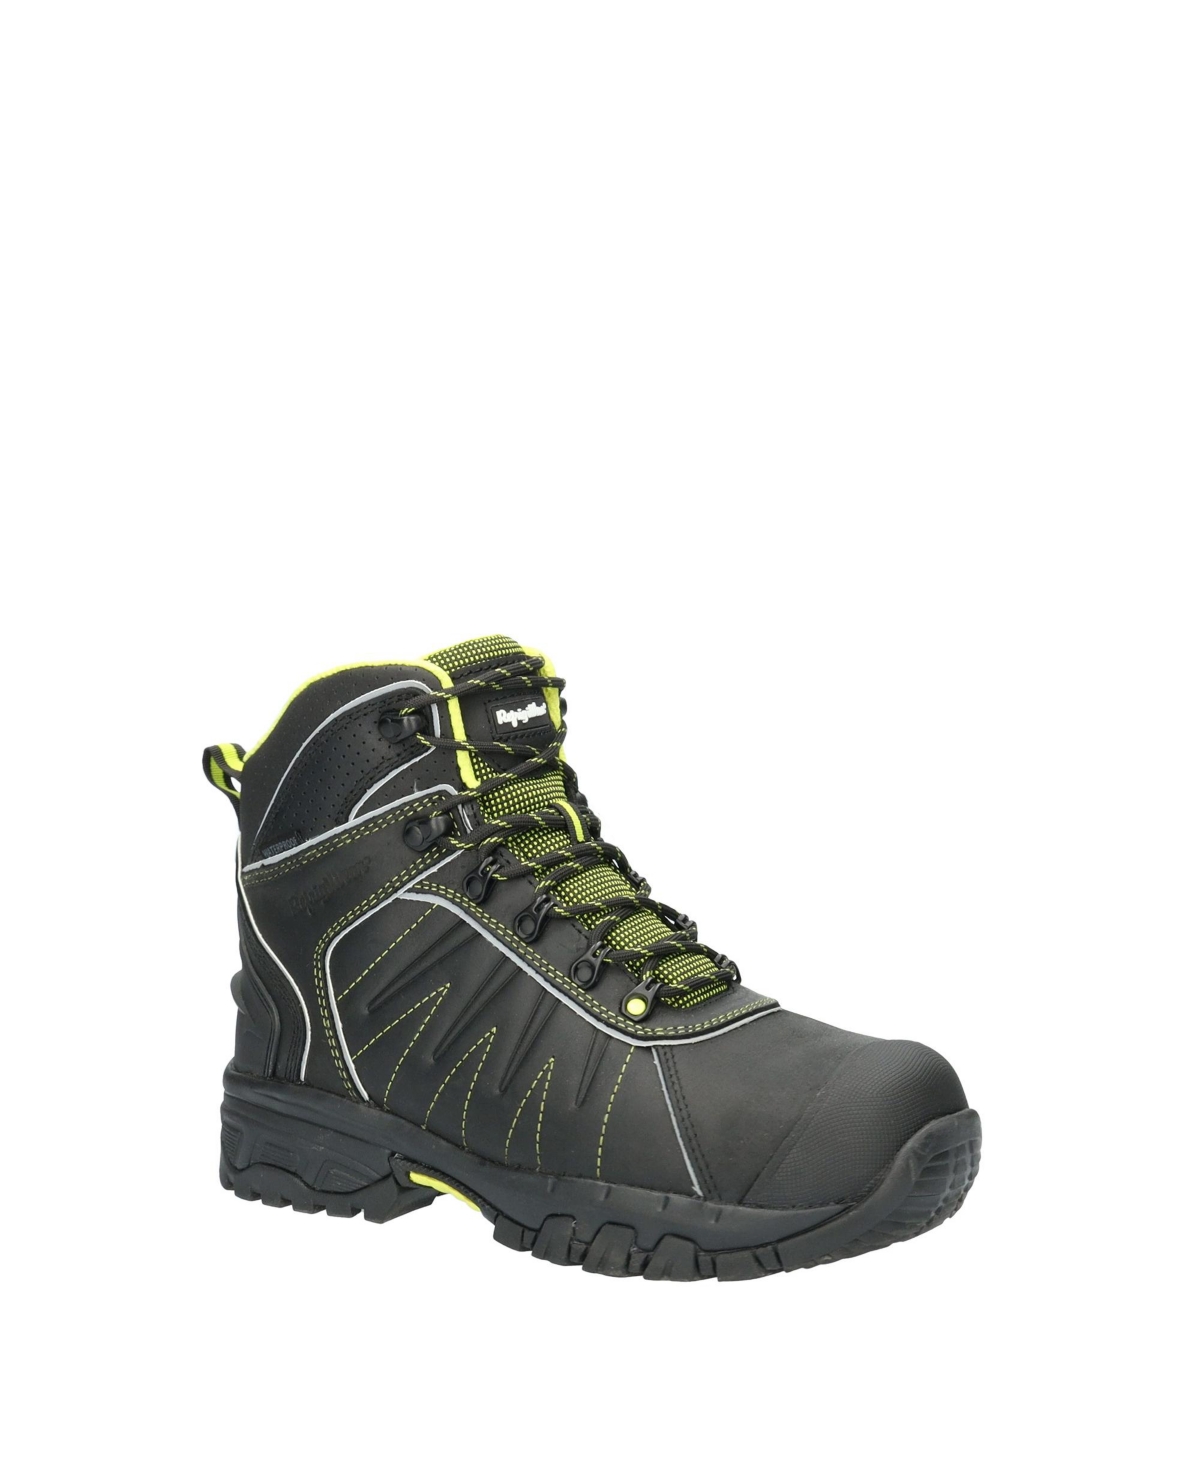 Men's OnyxRidge Hiker, Insulated Waterproof Leather Work Boots - Black